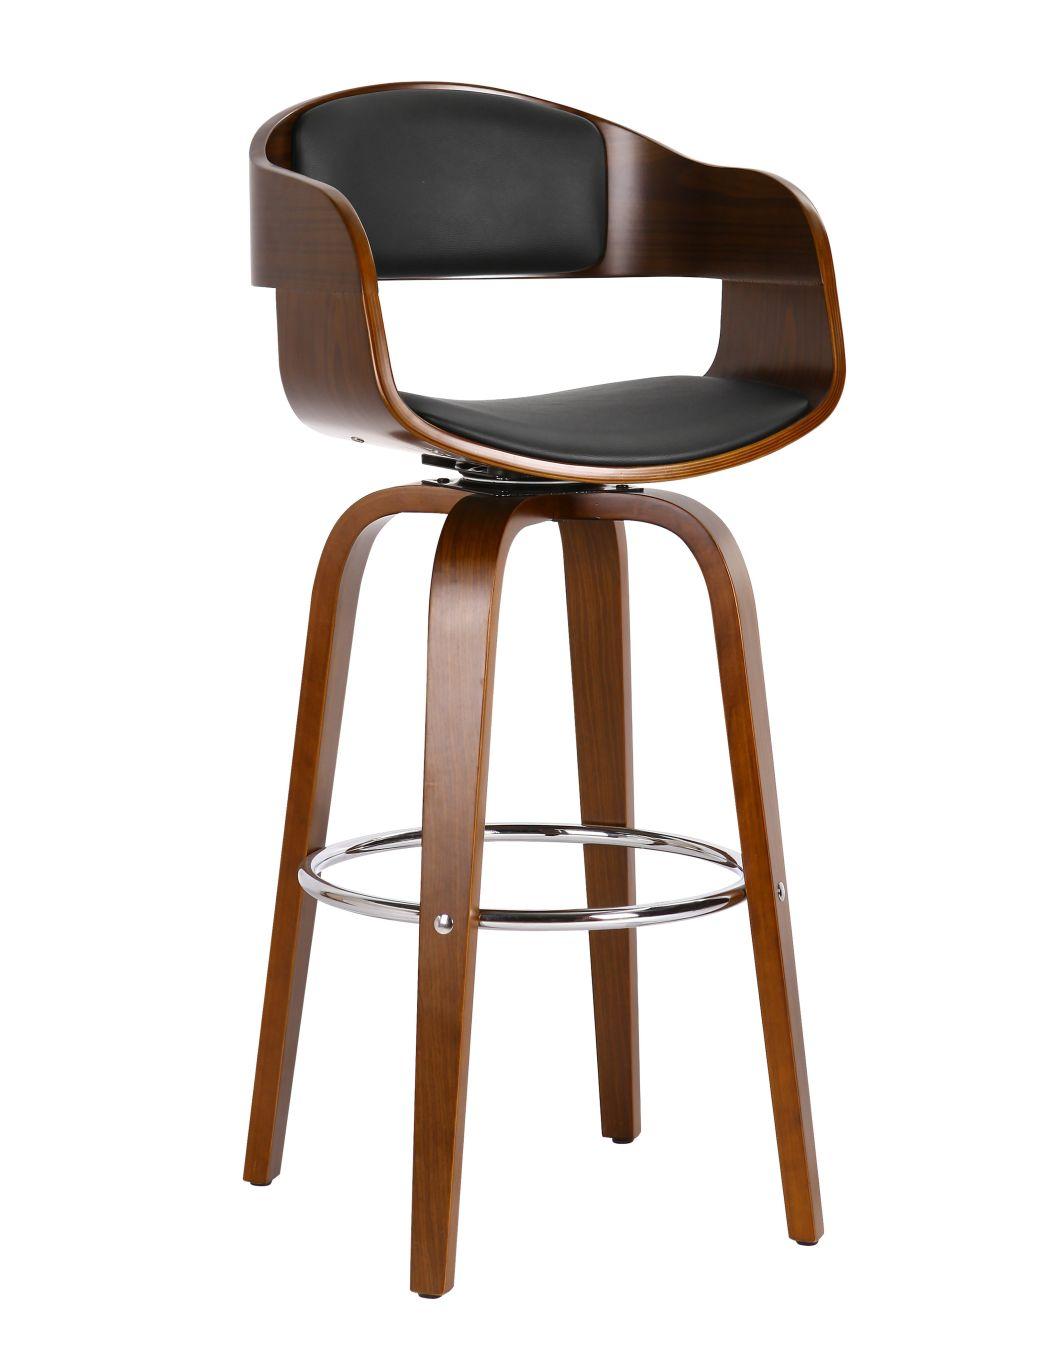 Walnut PU Leather Bar Chair Stools for Home Design Wood Legs Design Height Swivel Bar Chair